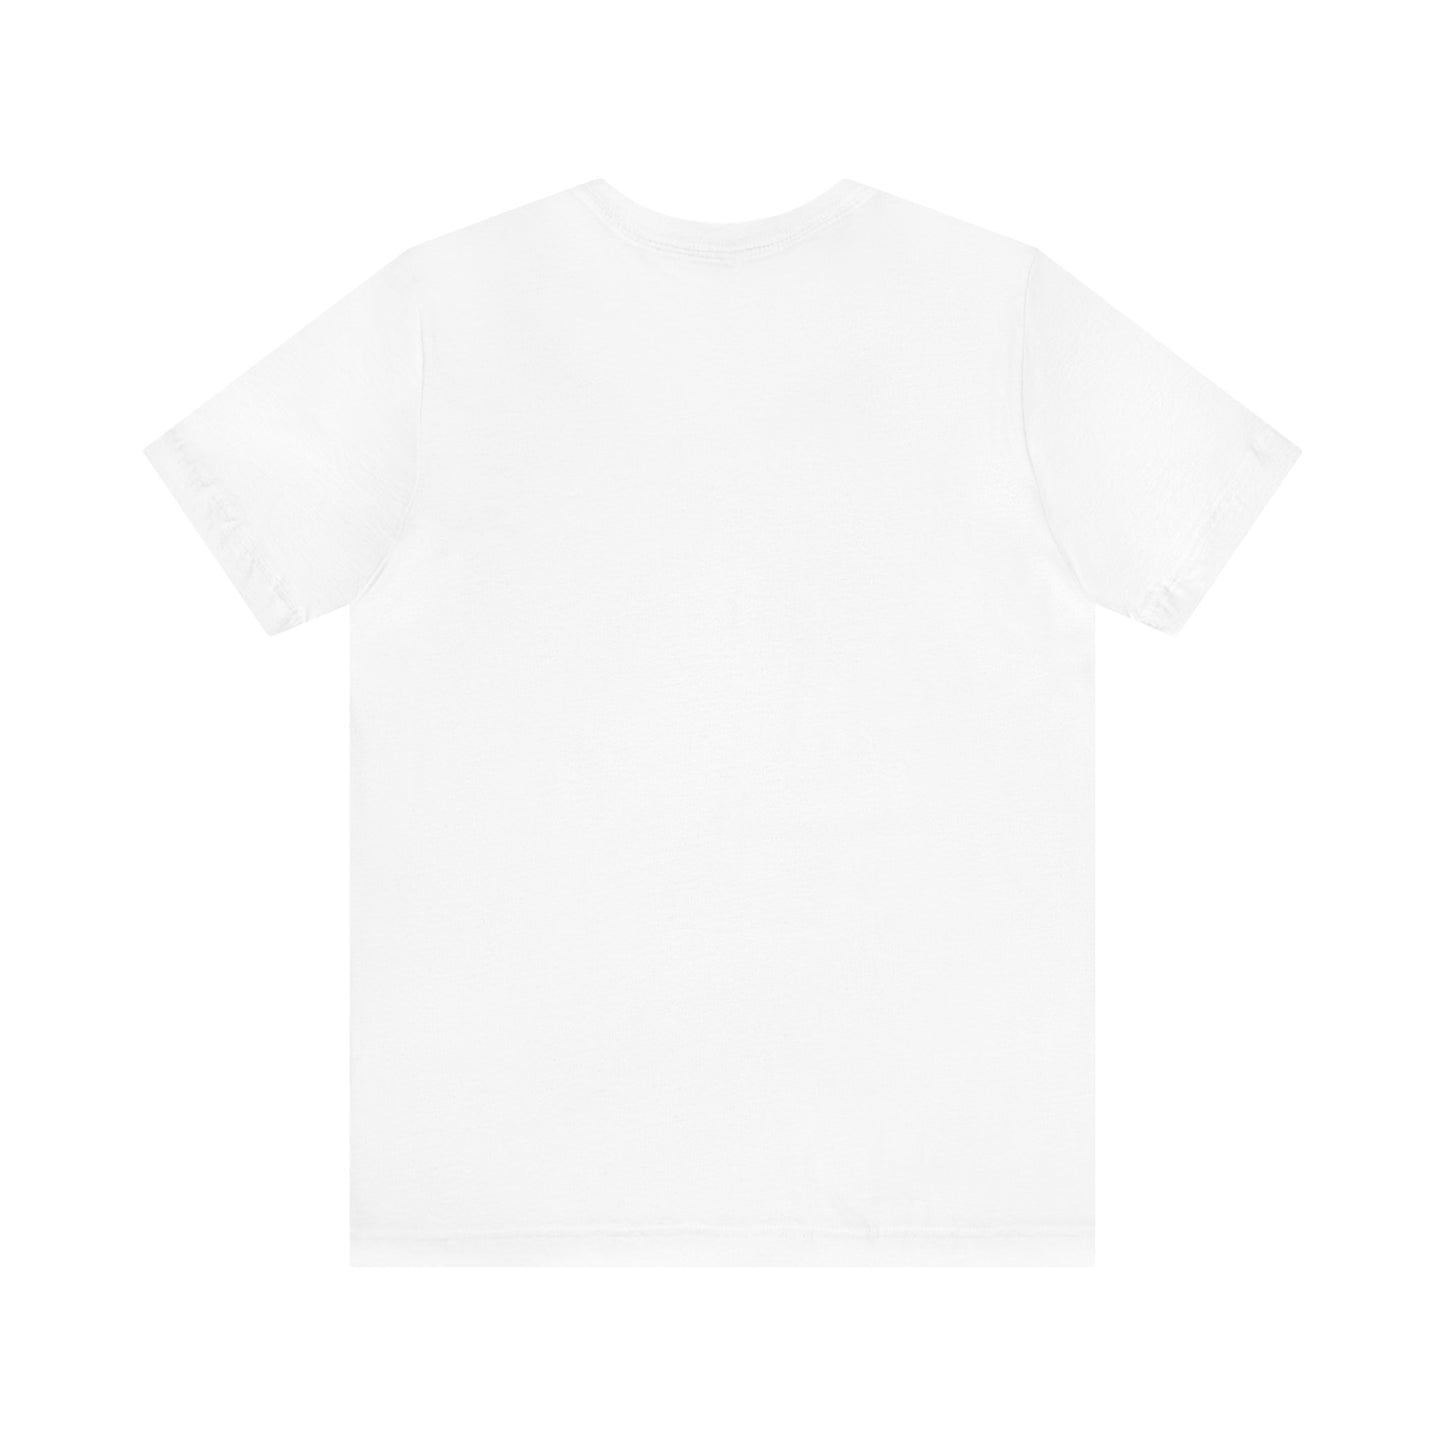 Edmonds Marina T-shirt